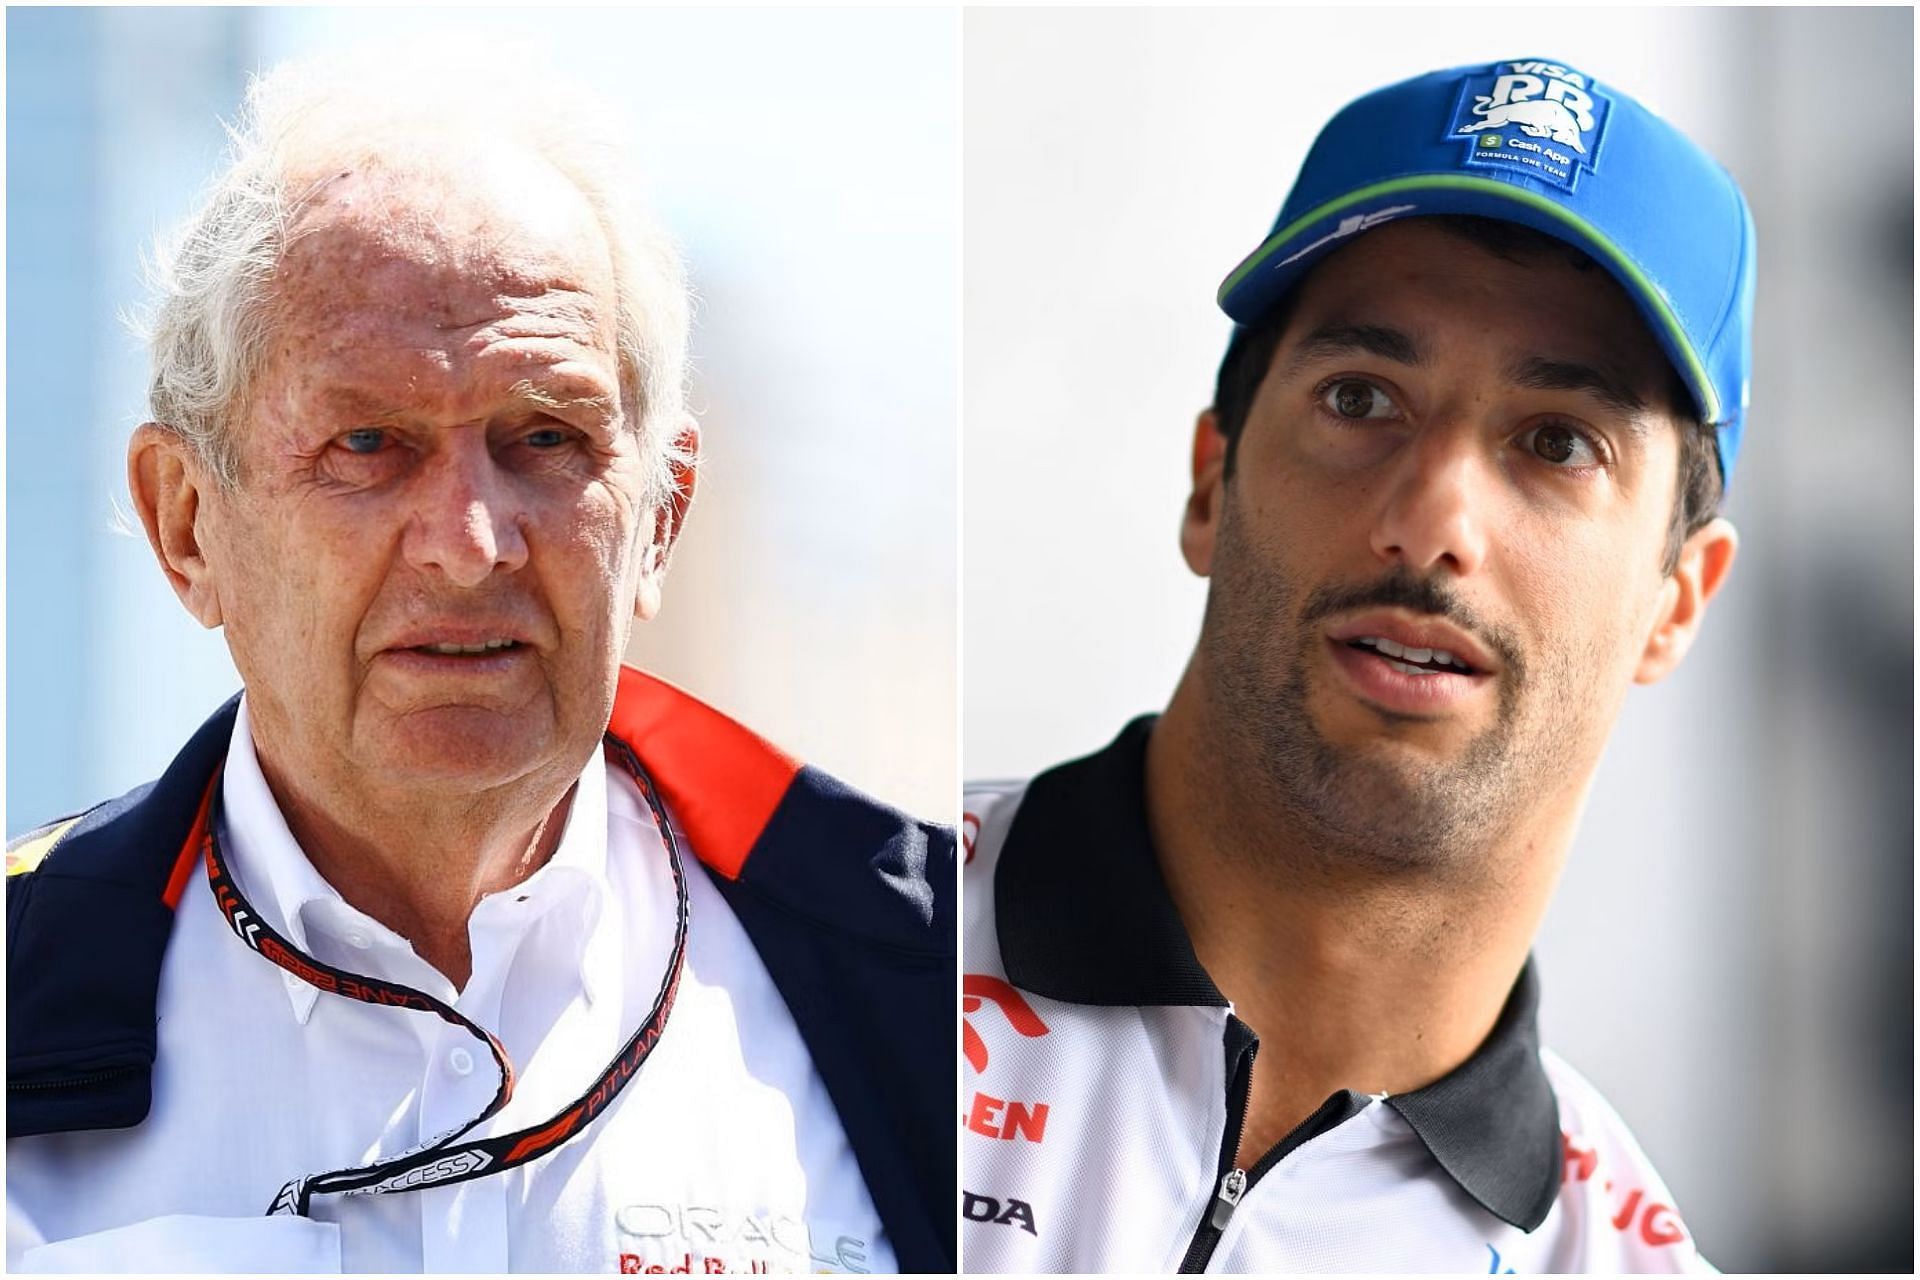 Helmut Marko (L) and Daniel Ricciardo (R) (Collage via Sportskeeda)